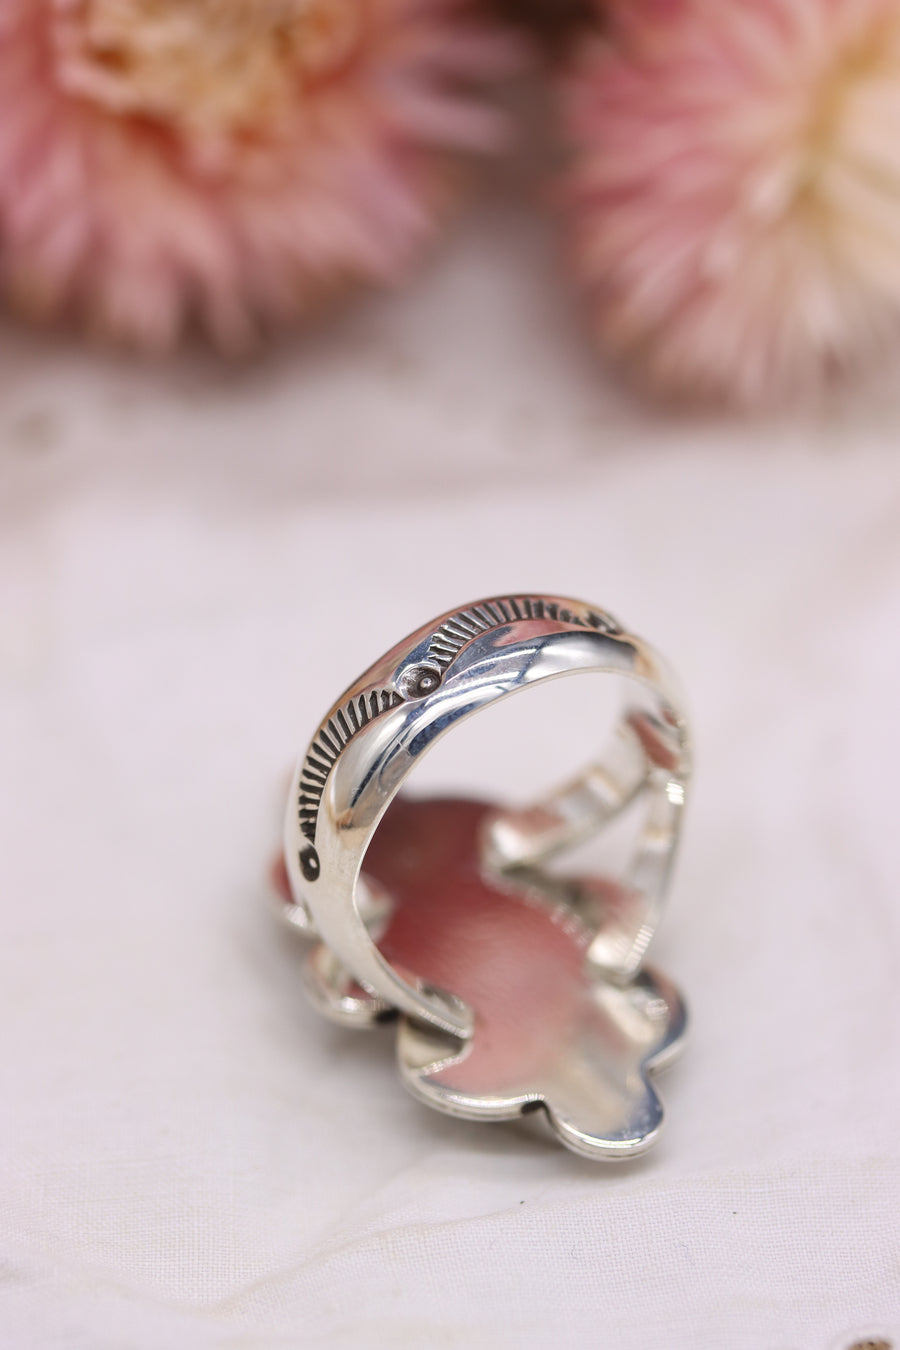 Santa Fe Ring (size 7.5)